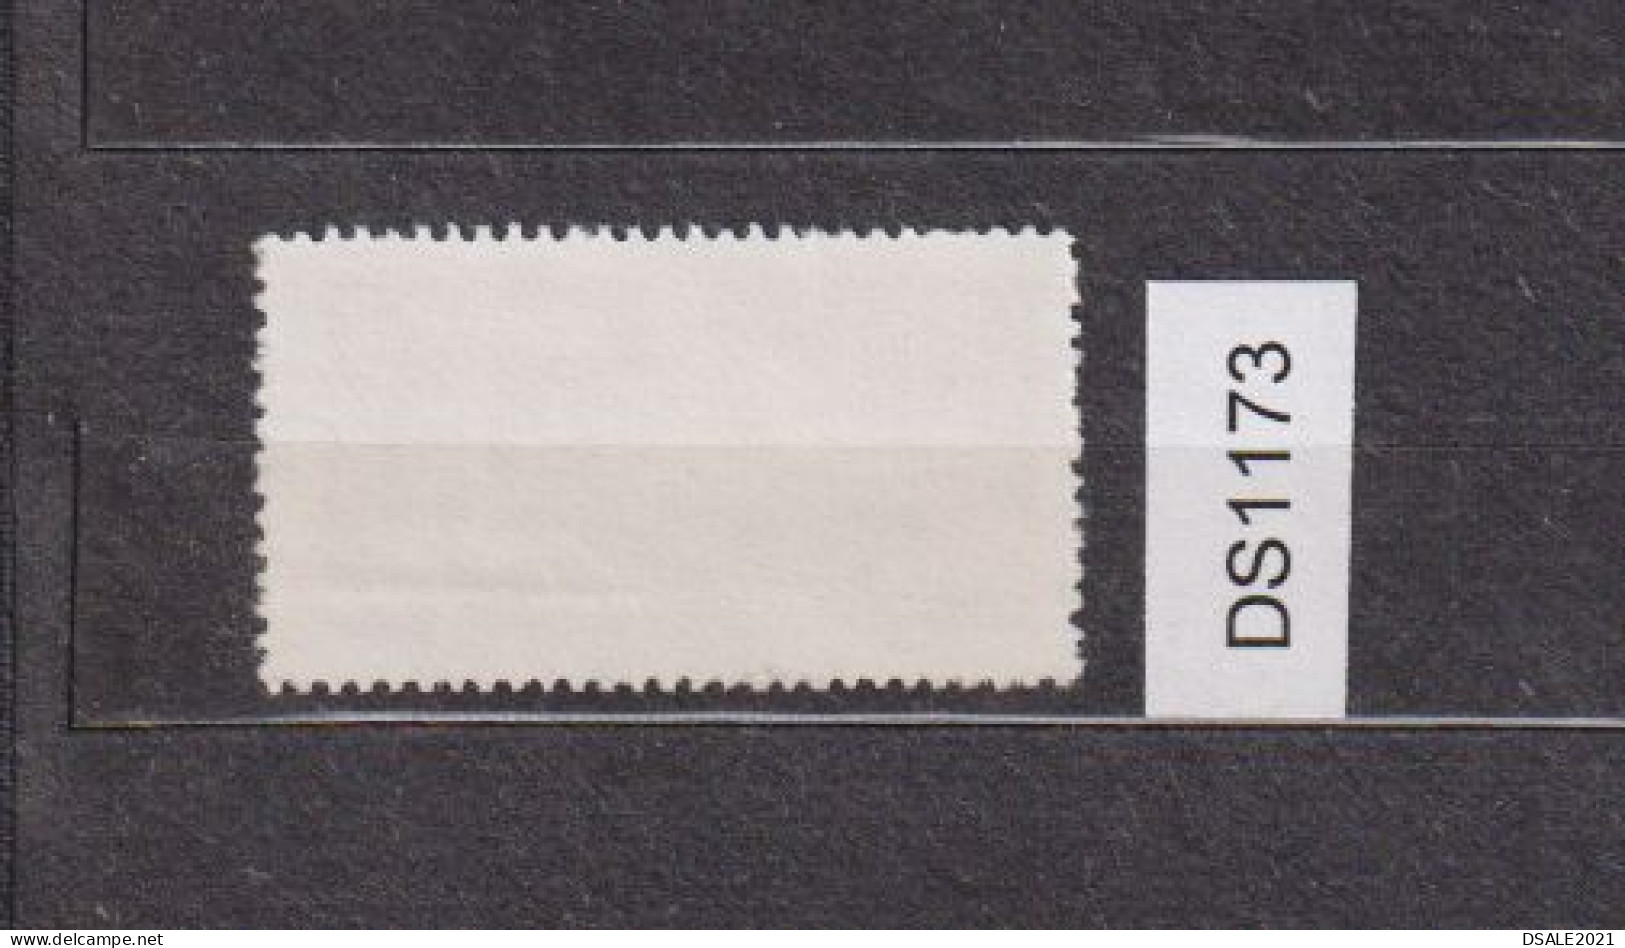 Union Des Automobilistes Bulgares, Union Of Bulgarian Motorists, 1978 Membership Paid Stamp Fiscal Revenue 5Lv. (ds1173) - Official Stamps